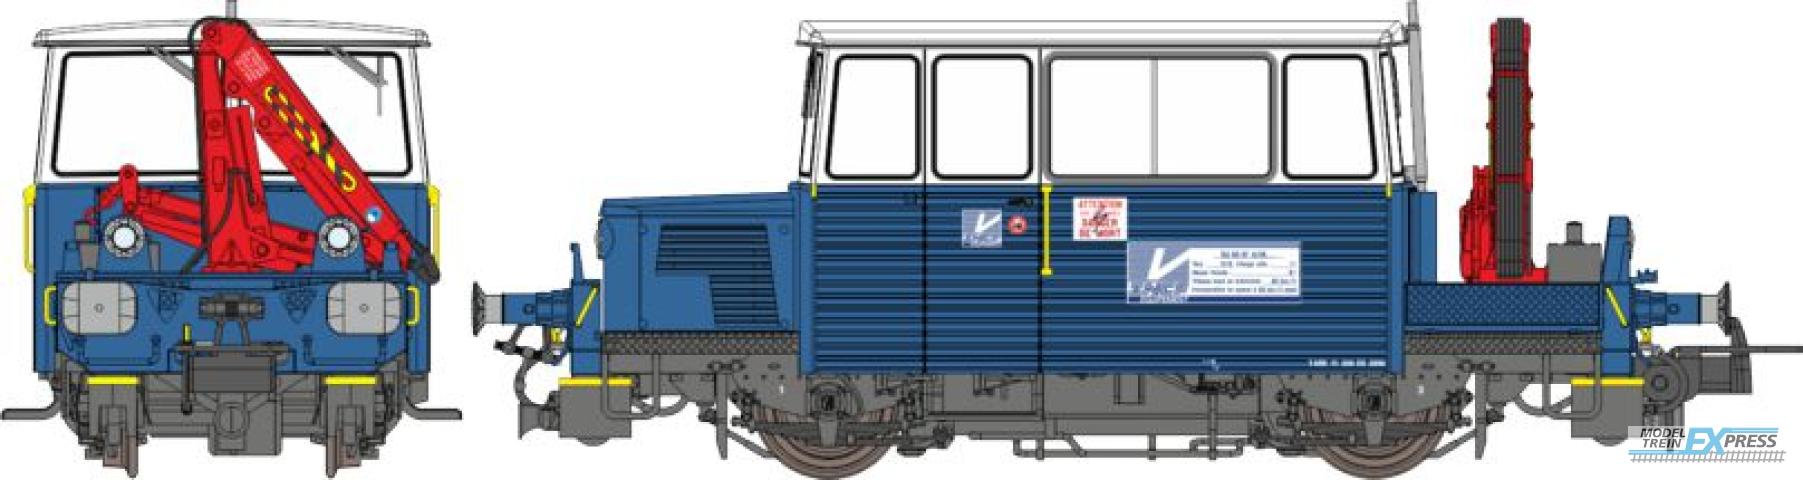 REE models MB-110 DU65 6 118 SOUTHWEST, with CRANE, Brusch Engine Blue/White, Era V - ANALOG DC